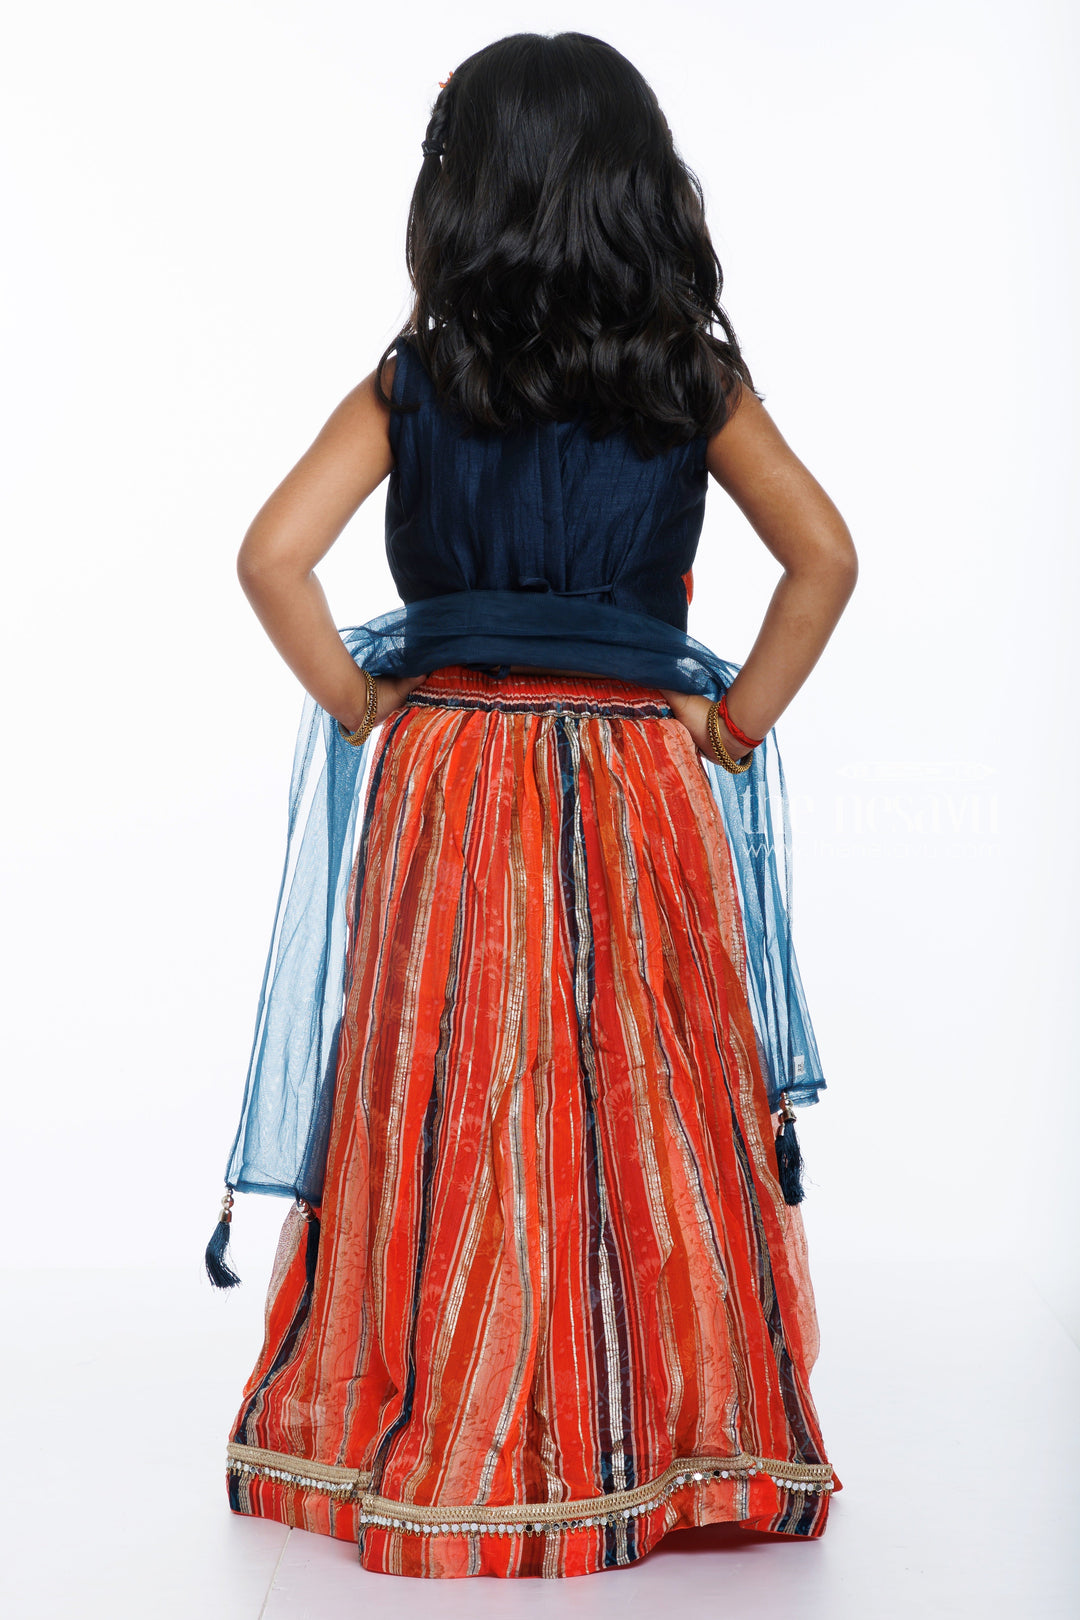 The Nesavu Girls Lehenga Choli Exquisite Handcrafted Silk Ghagra Choli for Girls - A Festive Wardrobe Essential! Nesavu Shop the Latest Bridal Style Lehenga Choli for Young Girls | Festive Silk Lehenga | The Nesavu